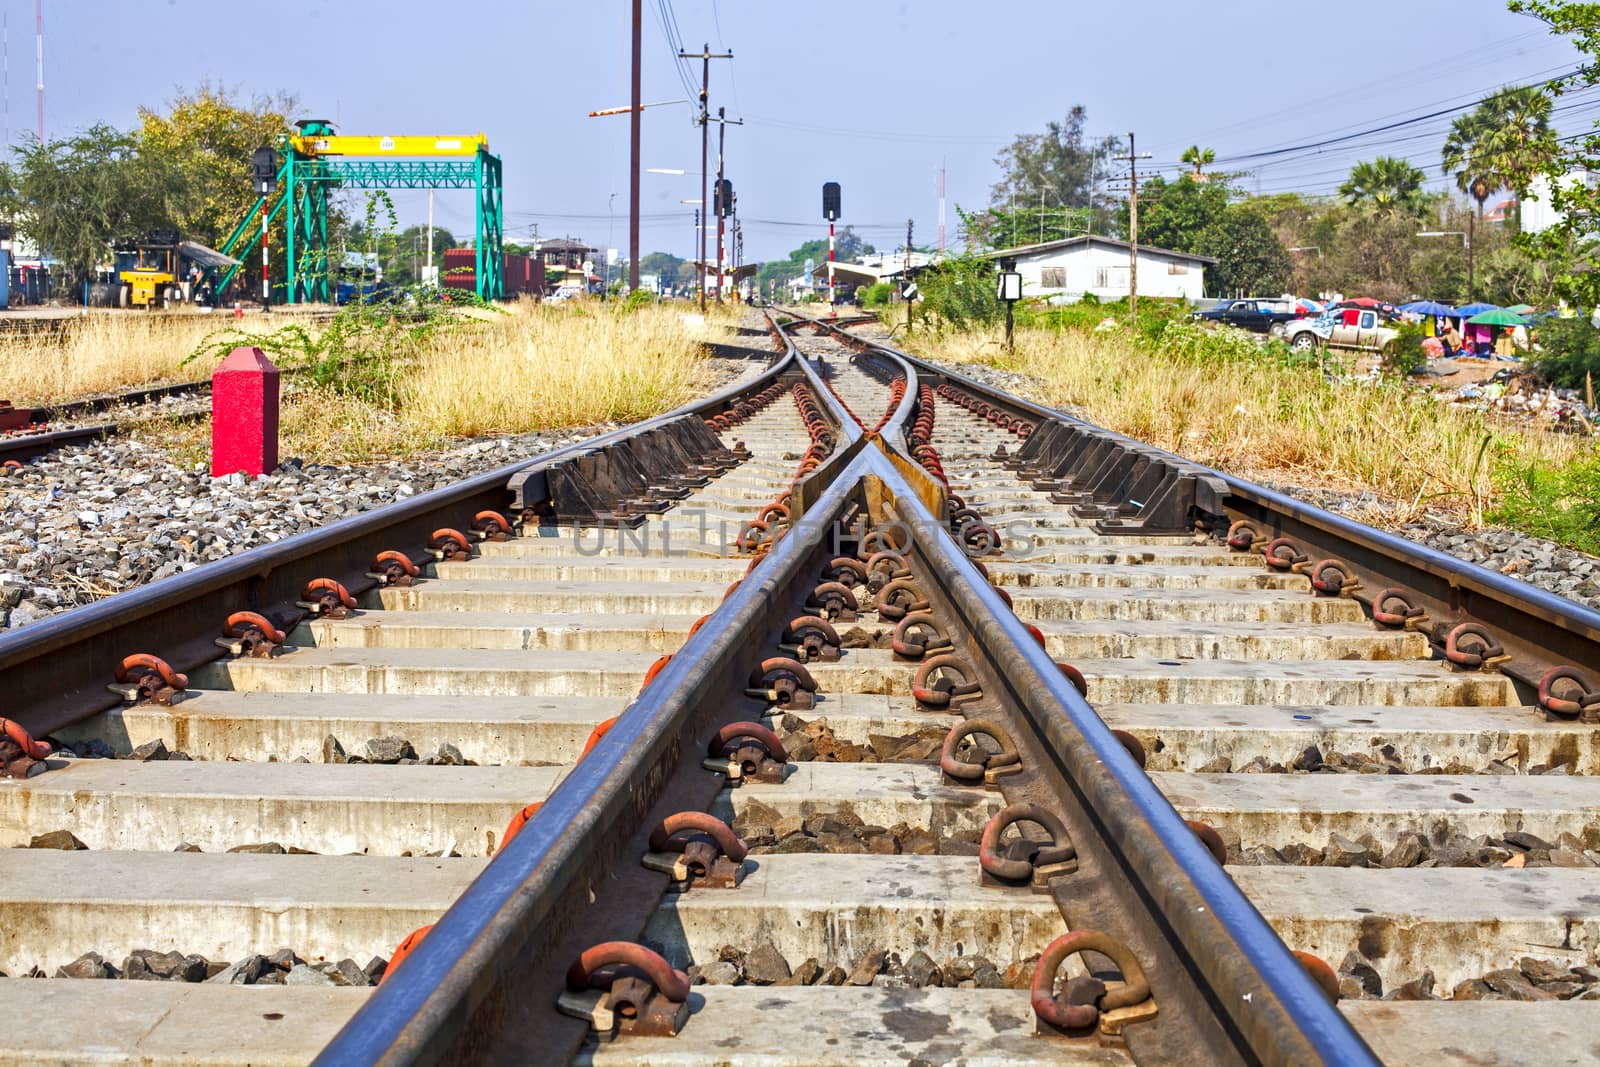 train tracks at the train depot